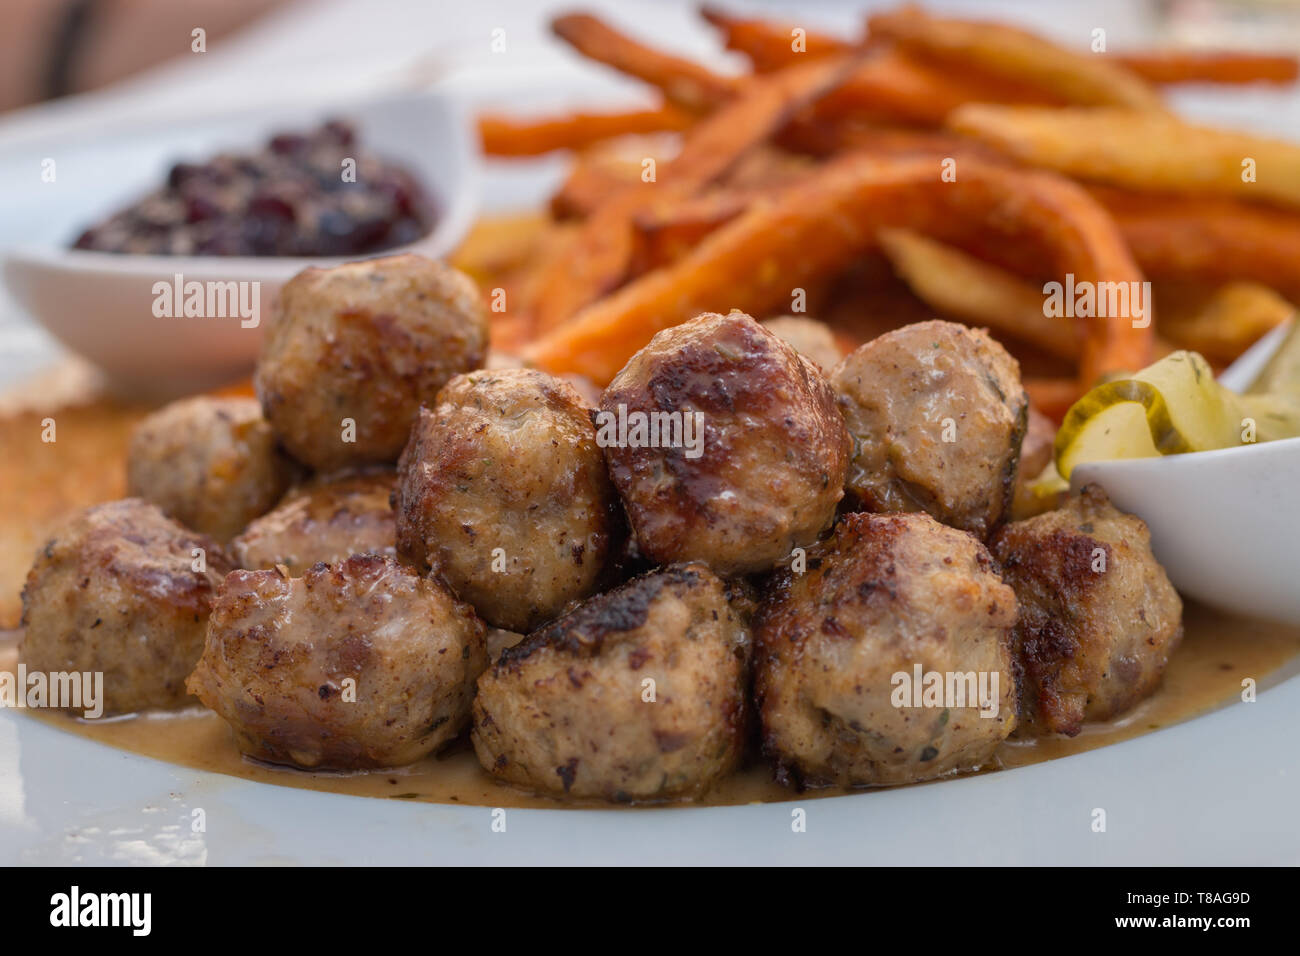 Kottbullar meatballs served with sweet potato fries, cucumber salad and lingonberry sauce Stock Photo